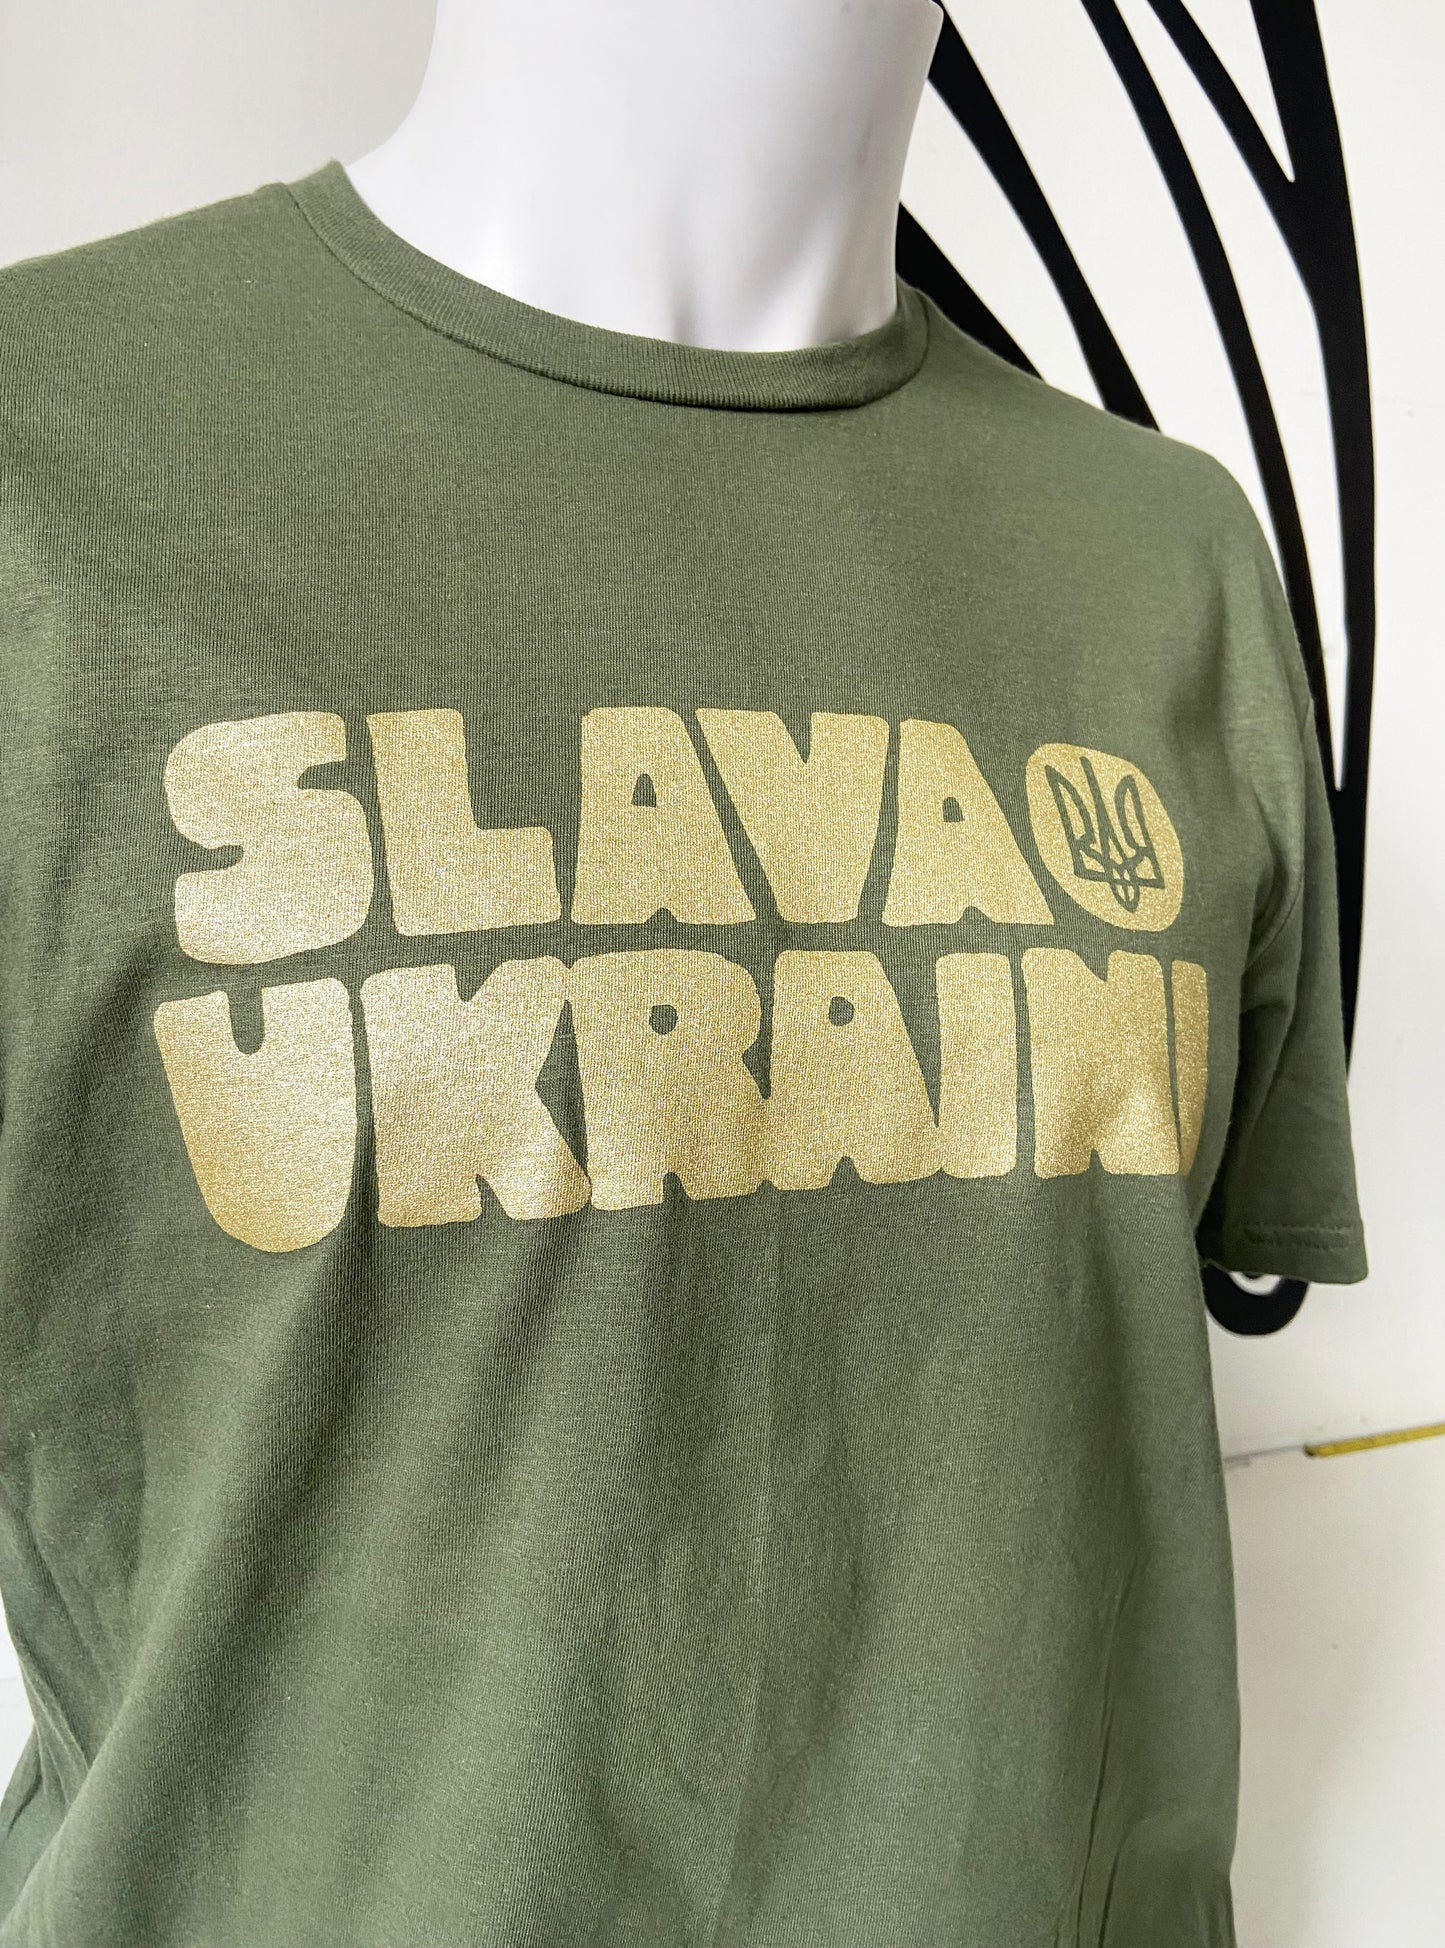 SLAVA UKRAINI Unisex Tee in Support of the Ukraine Crisis - LIMITED EDITION*